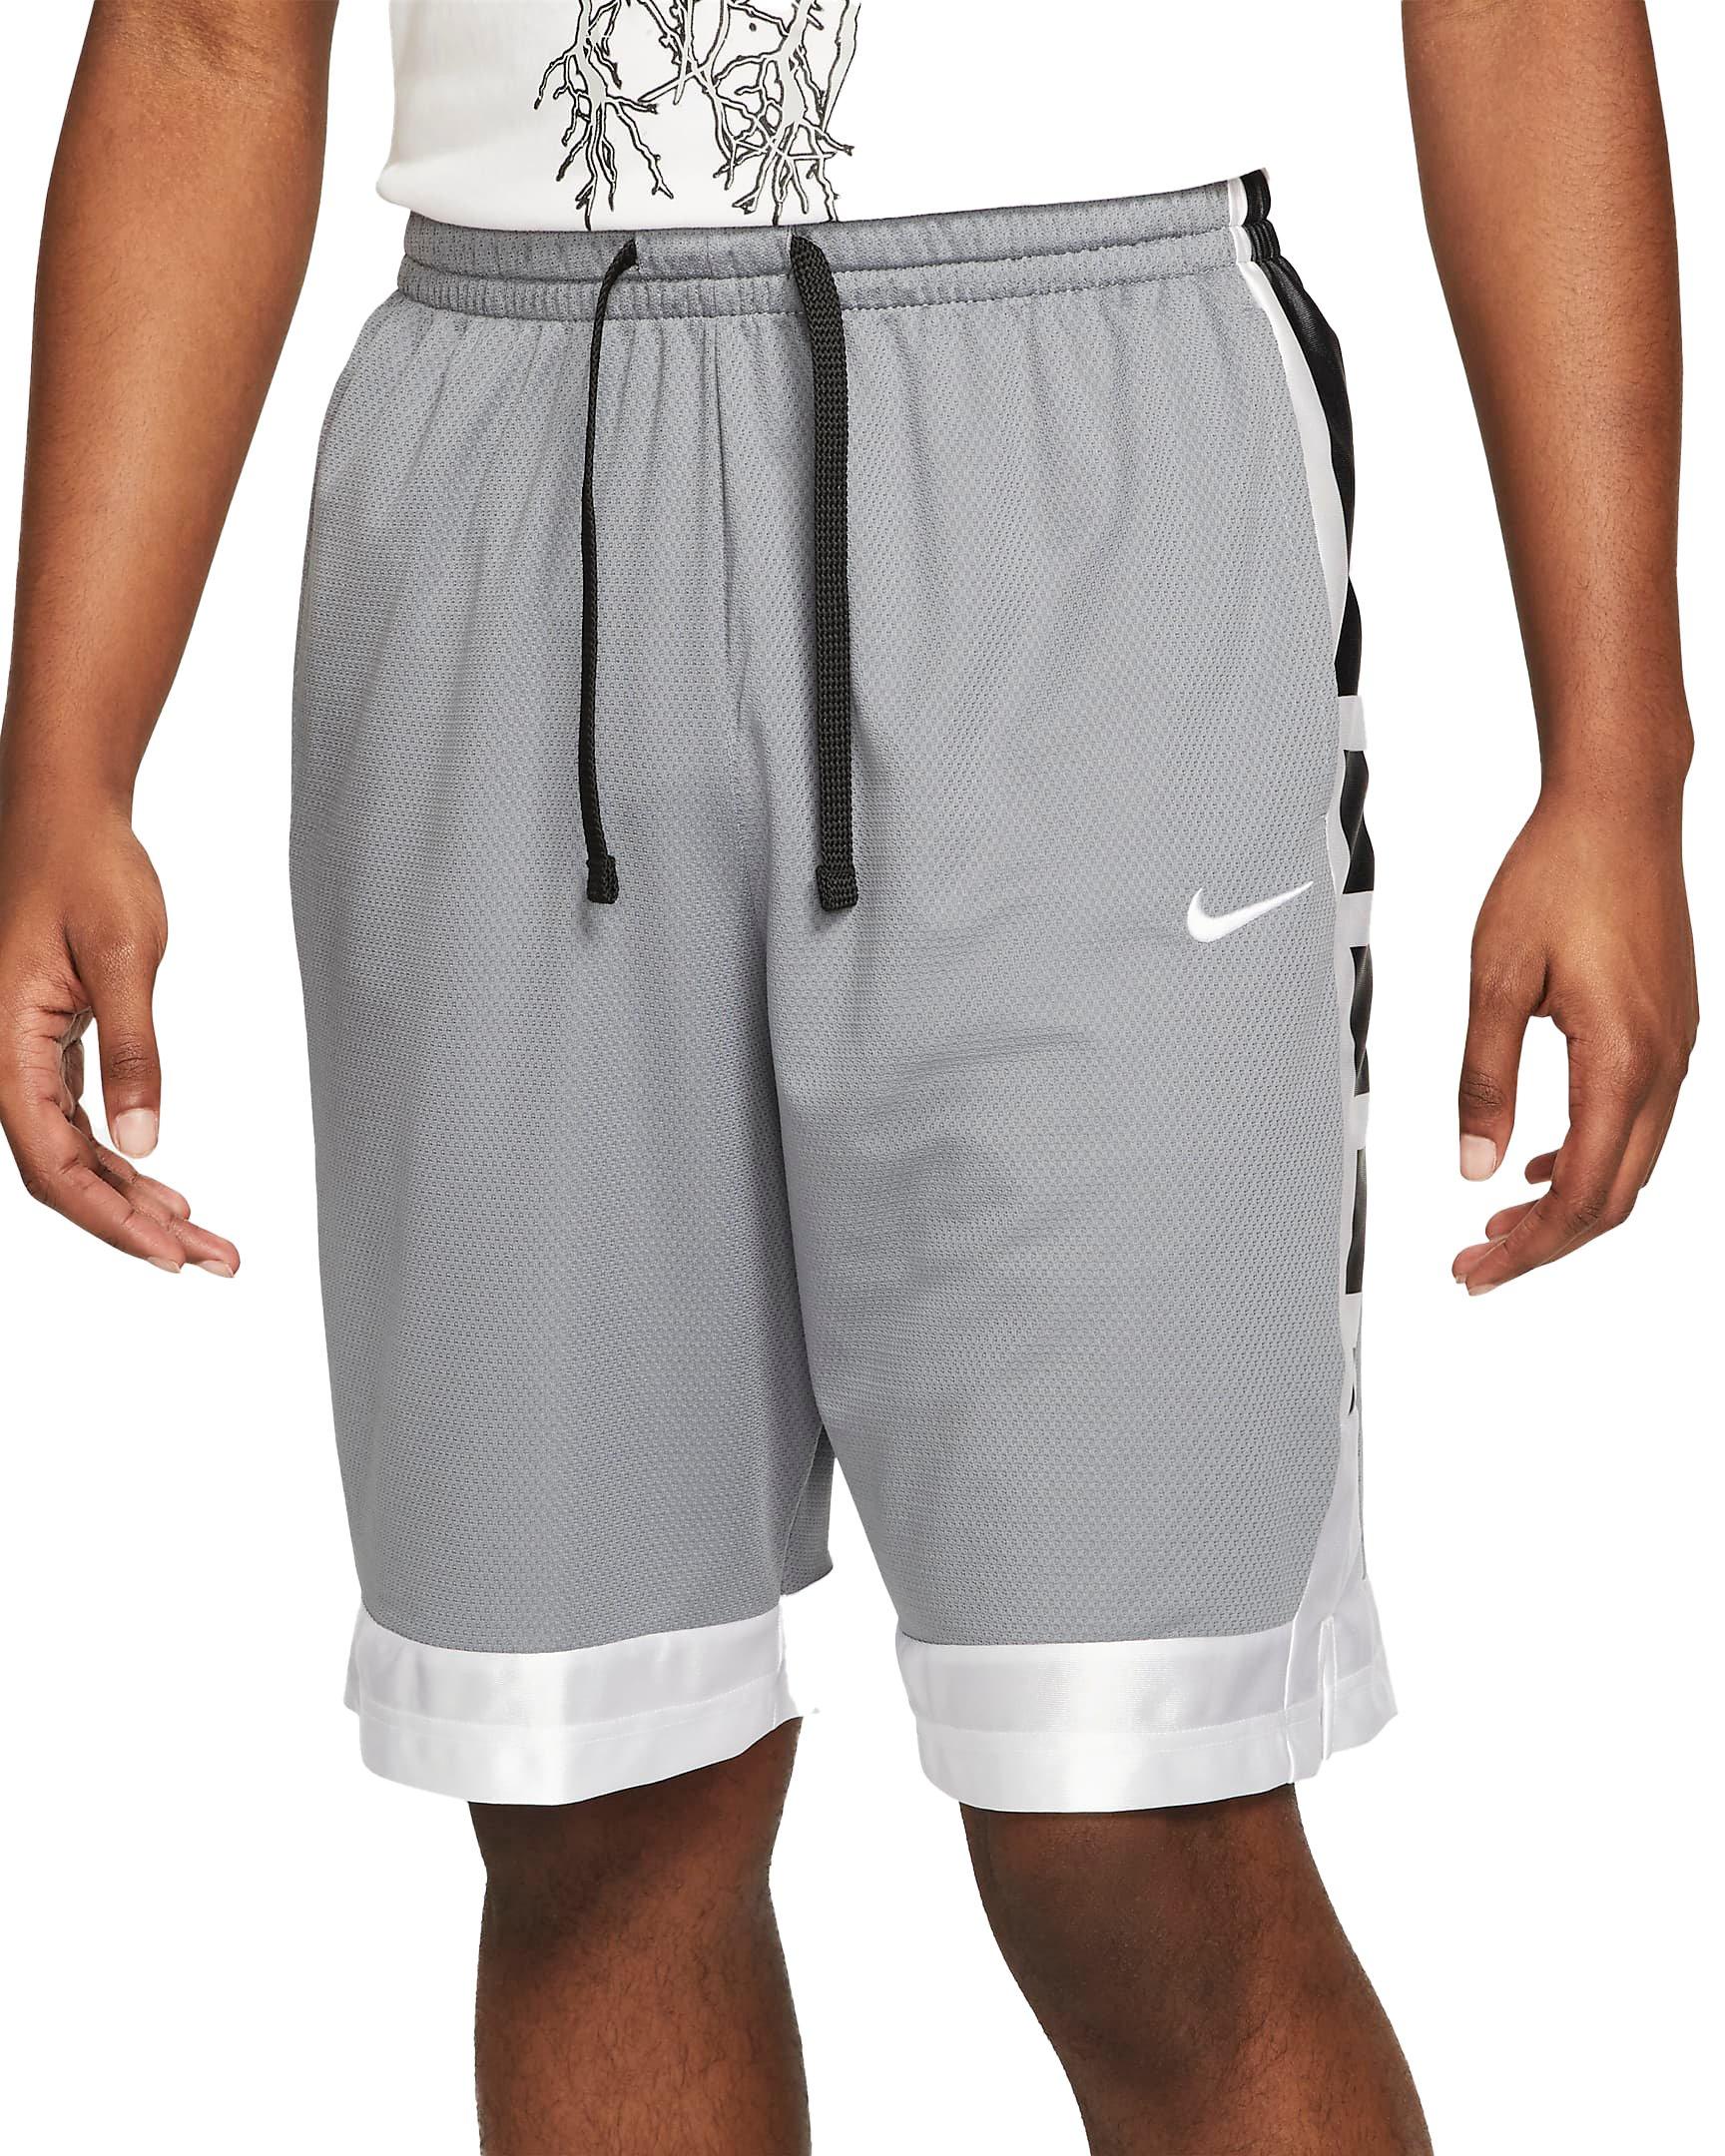 Source Youth Cheap college Basketball Jerseys 2021 Men Boys breathable  custom Basketball Uniforms shirts shorts Set big size on m.